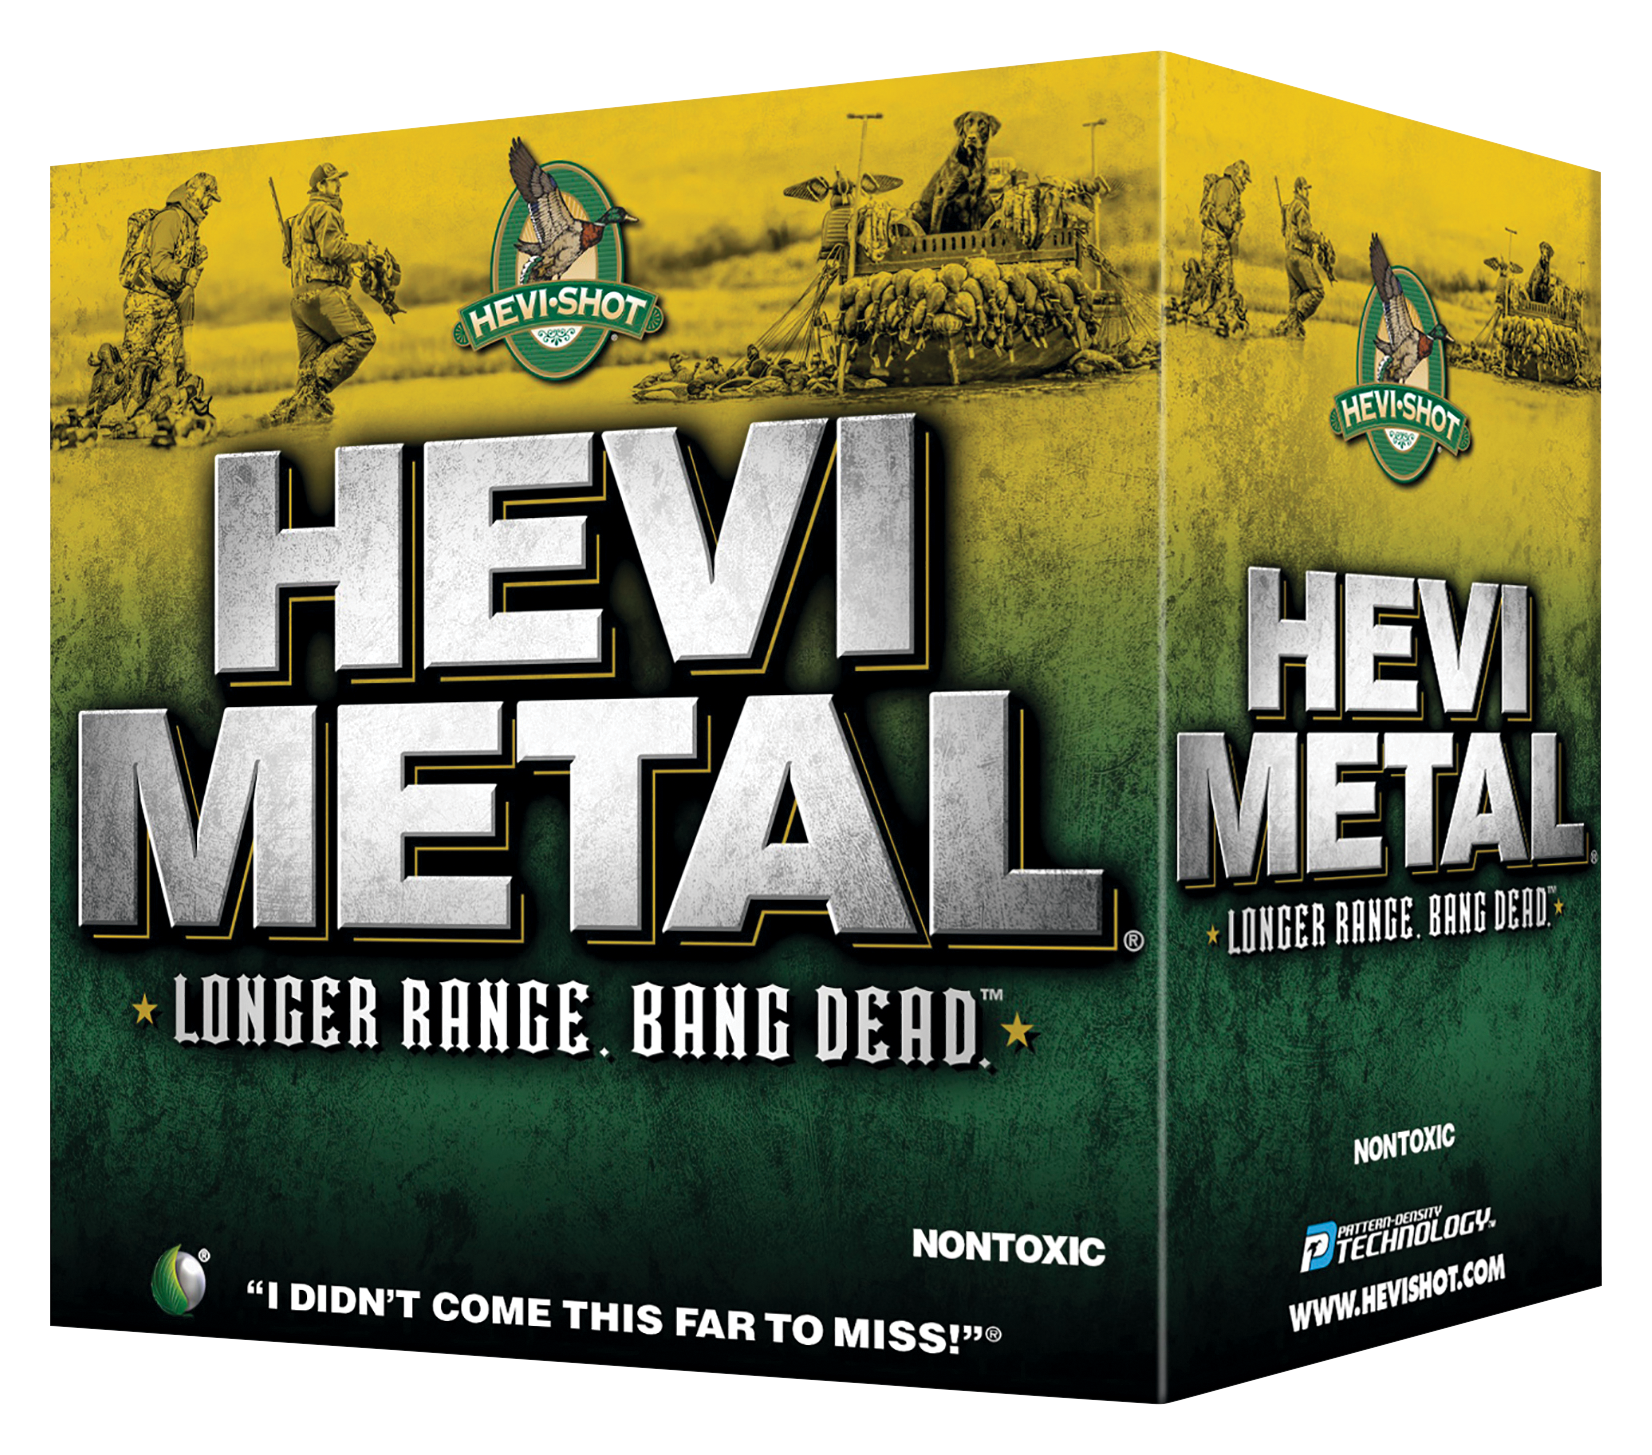 Hevi-Shot HEVI-Metal Longer Range Shotgun Shells - 12 Gauge - #2 - 2.75"" - 250 Rounds